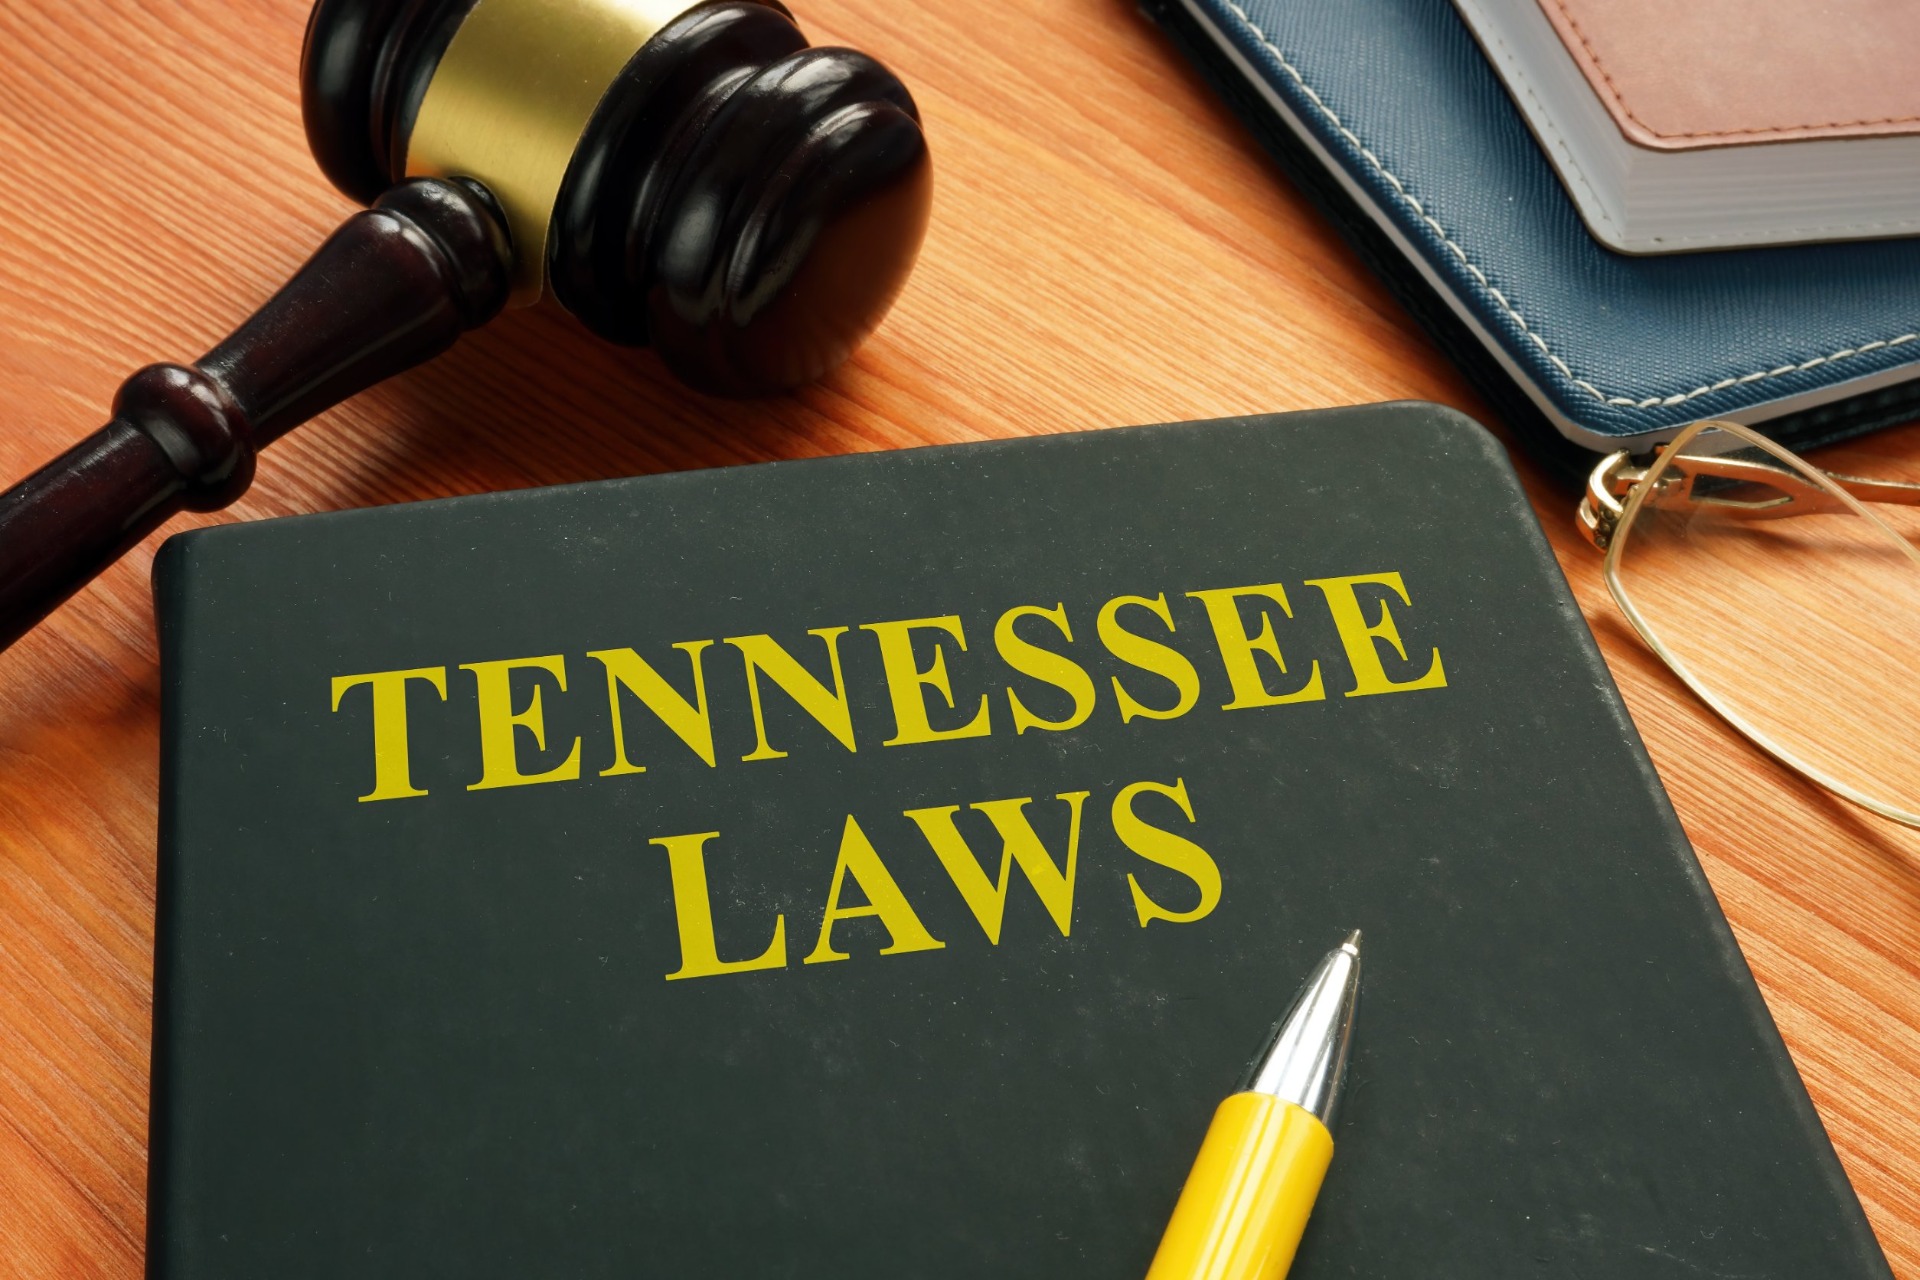 Is kratom legal in Tennessee